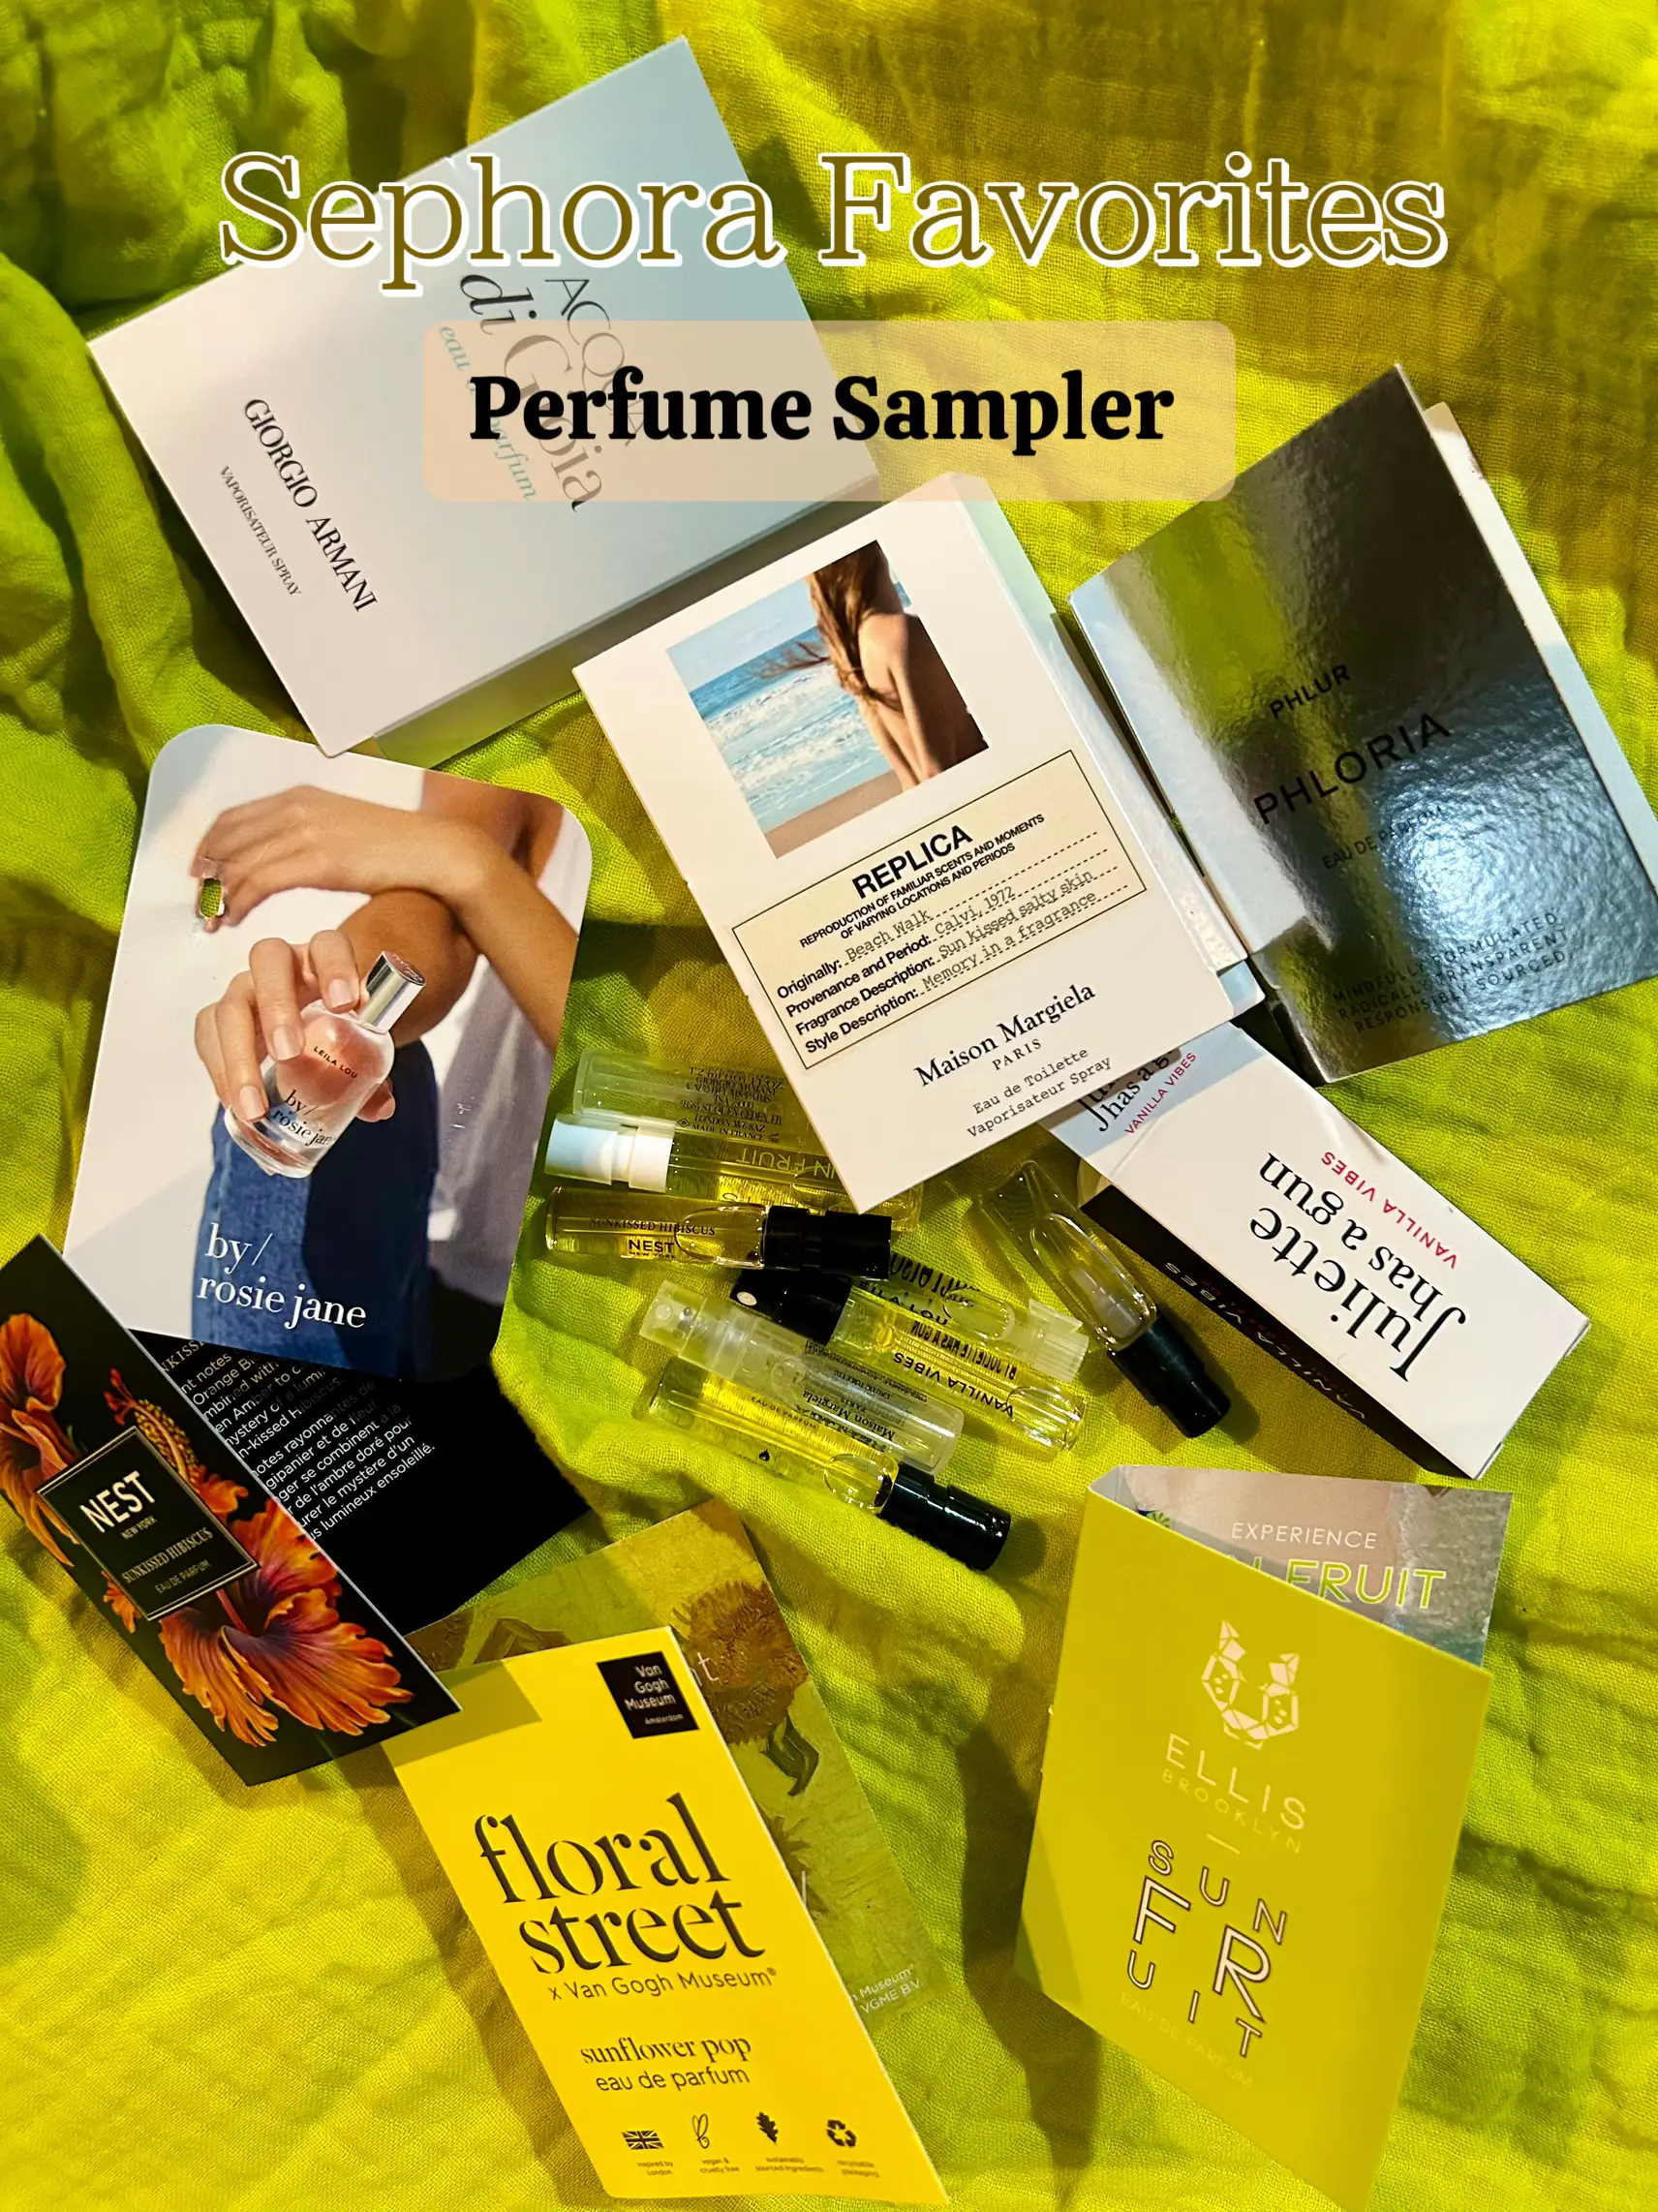 Sephora Favorites Perfume Sampler, Gallery posted by Richie Allyn